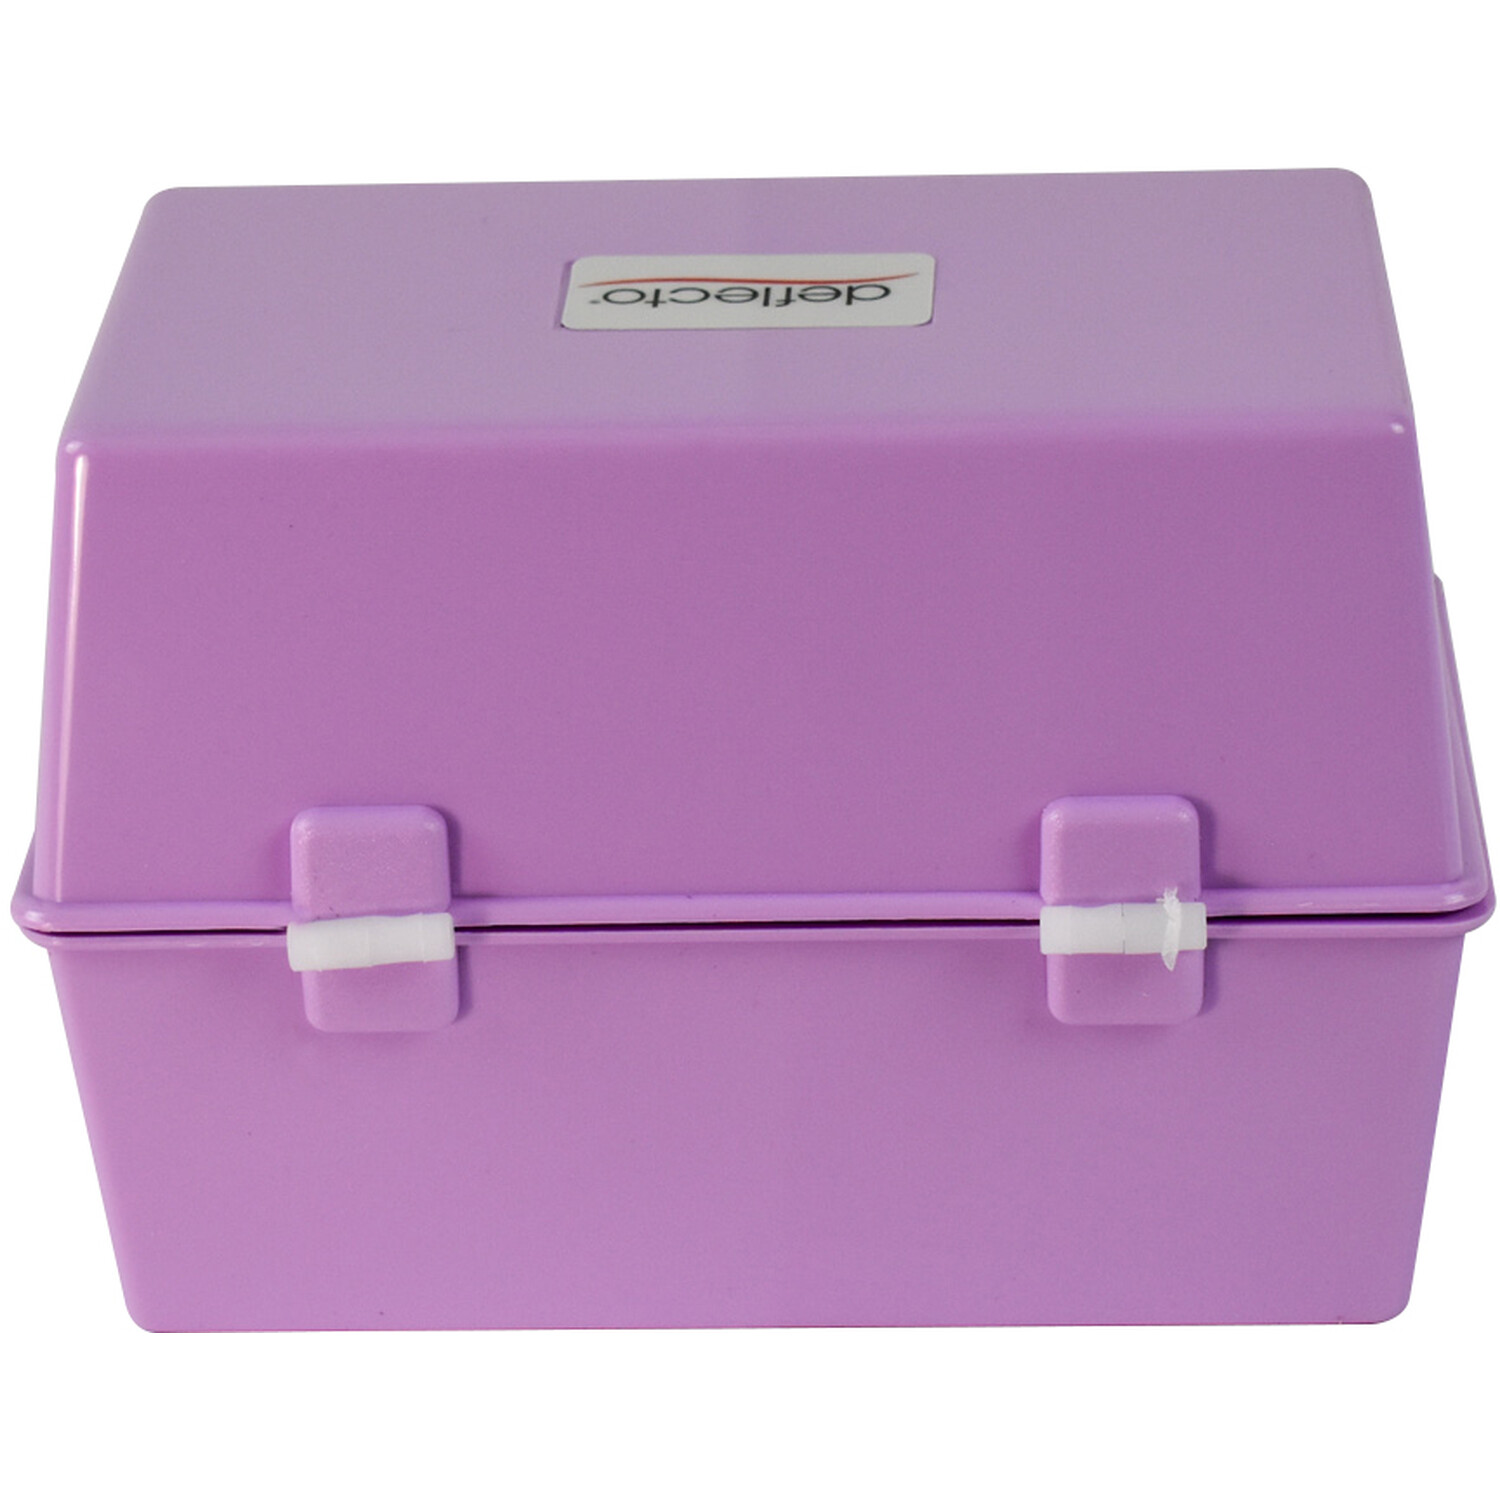 Deflecto Card Index Box - Lavender Image 2